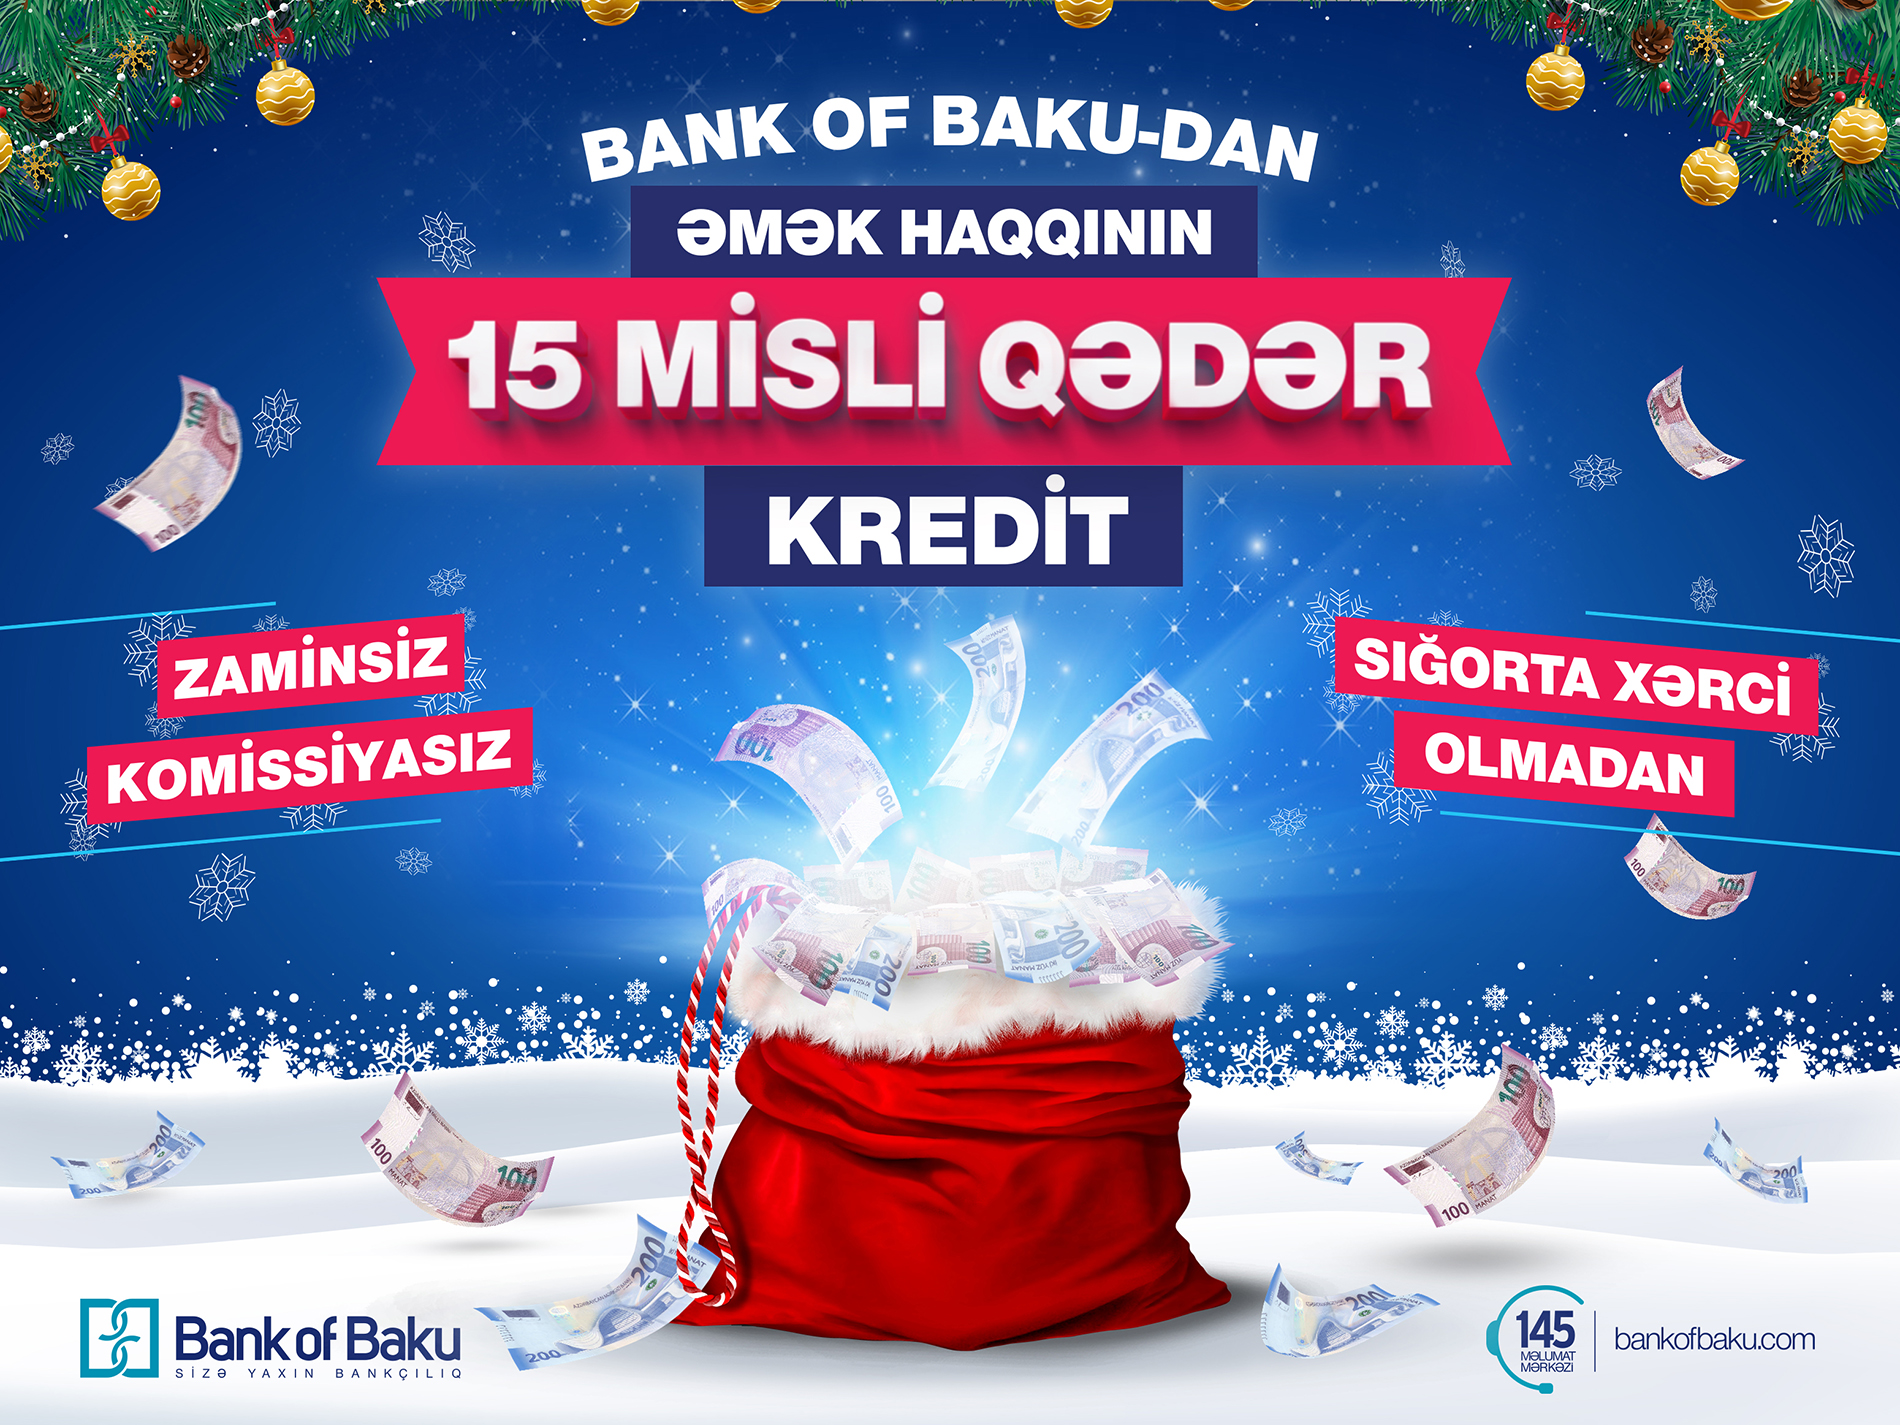 Bank of Baku-dan Yeni il KAMPANİYASI